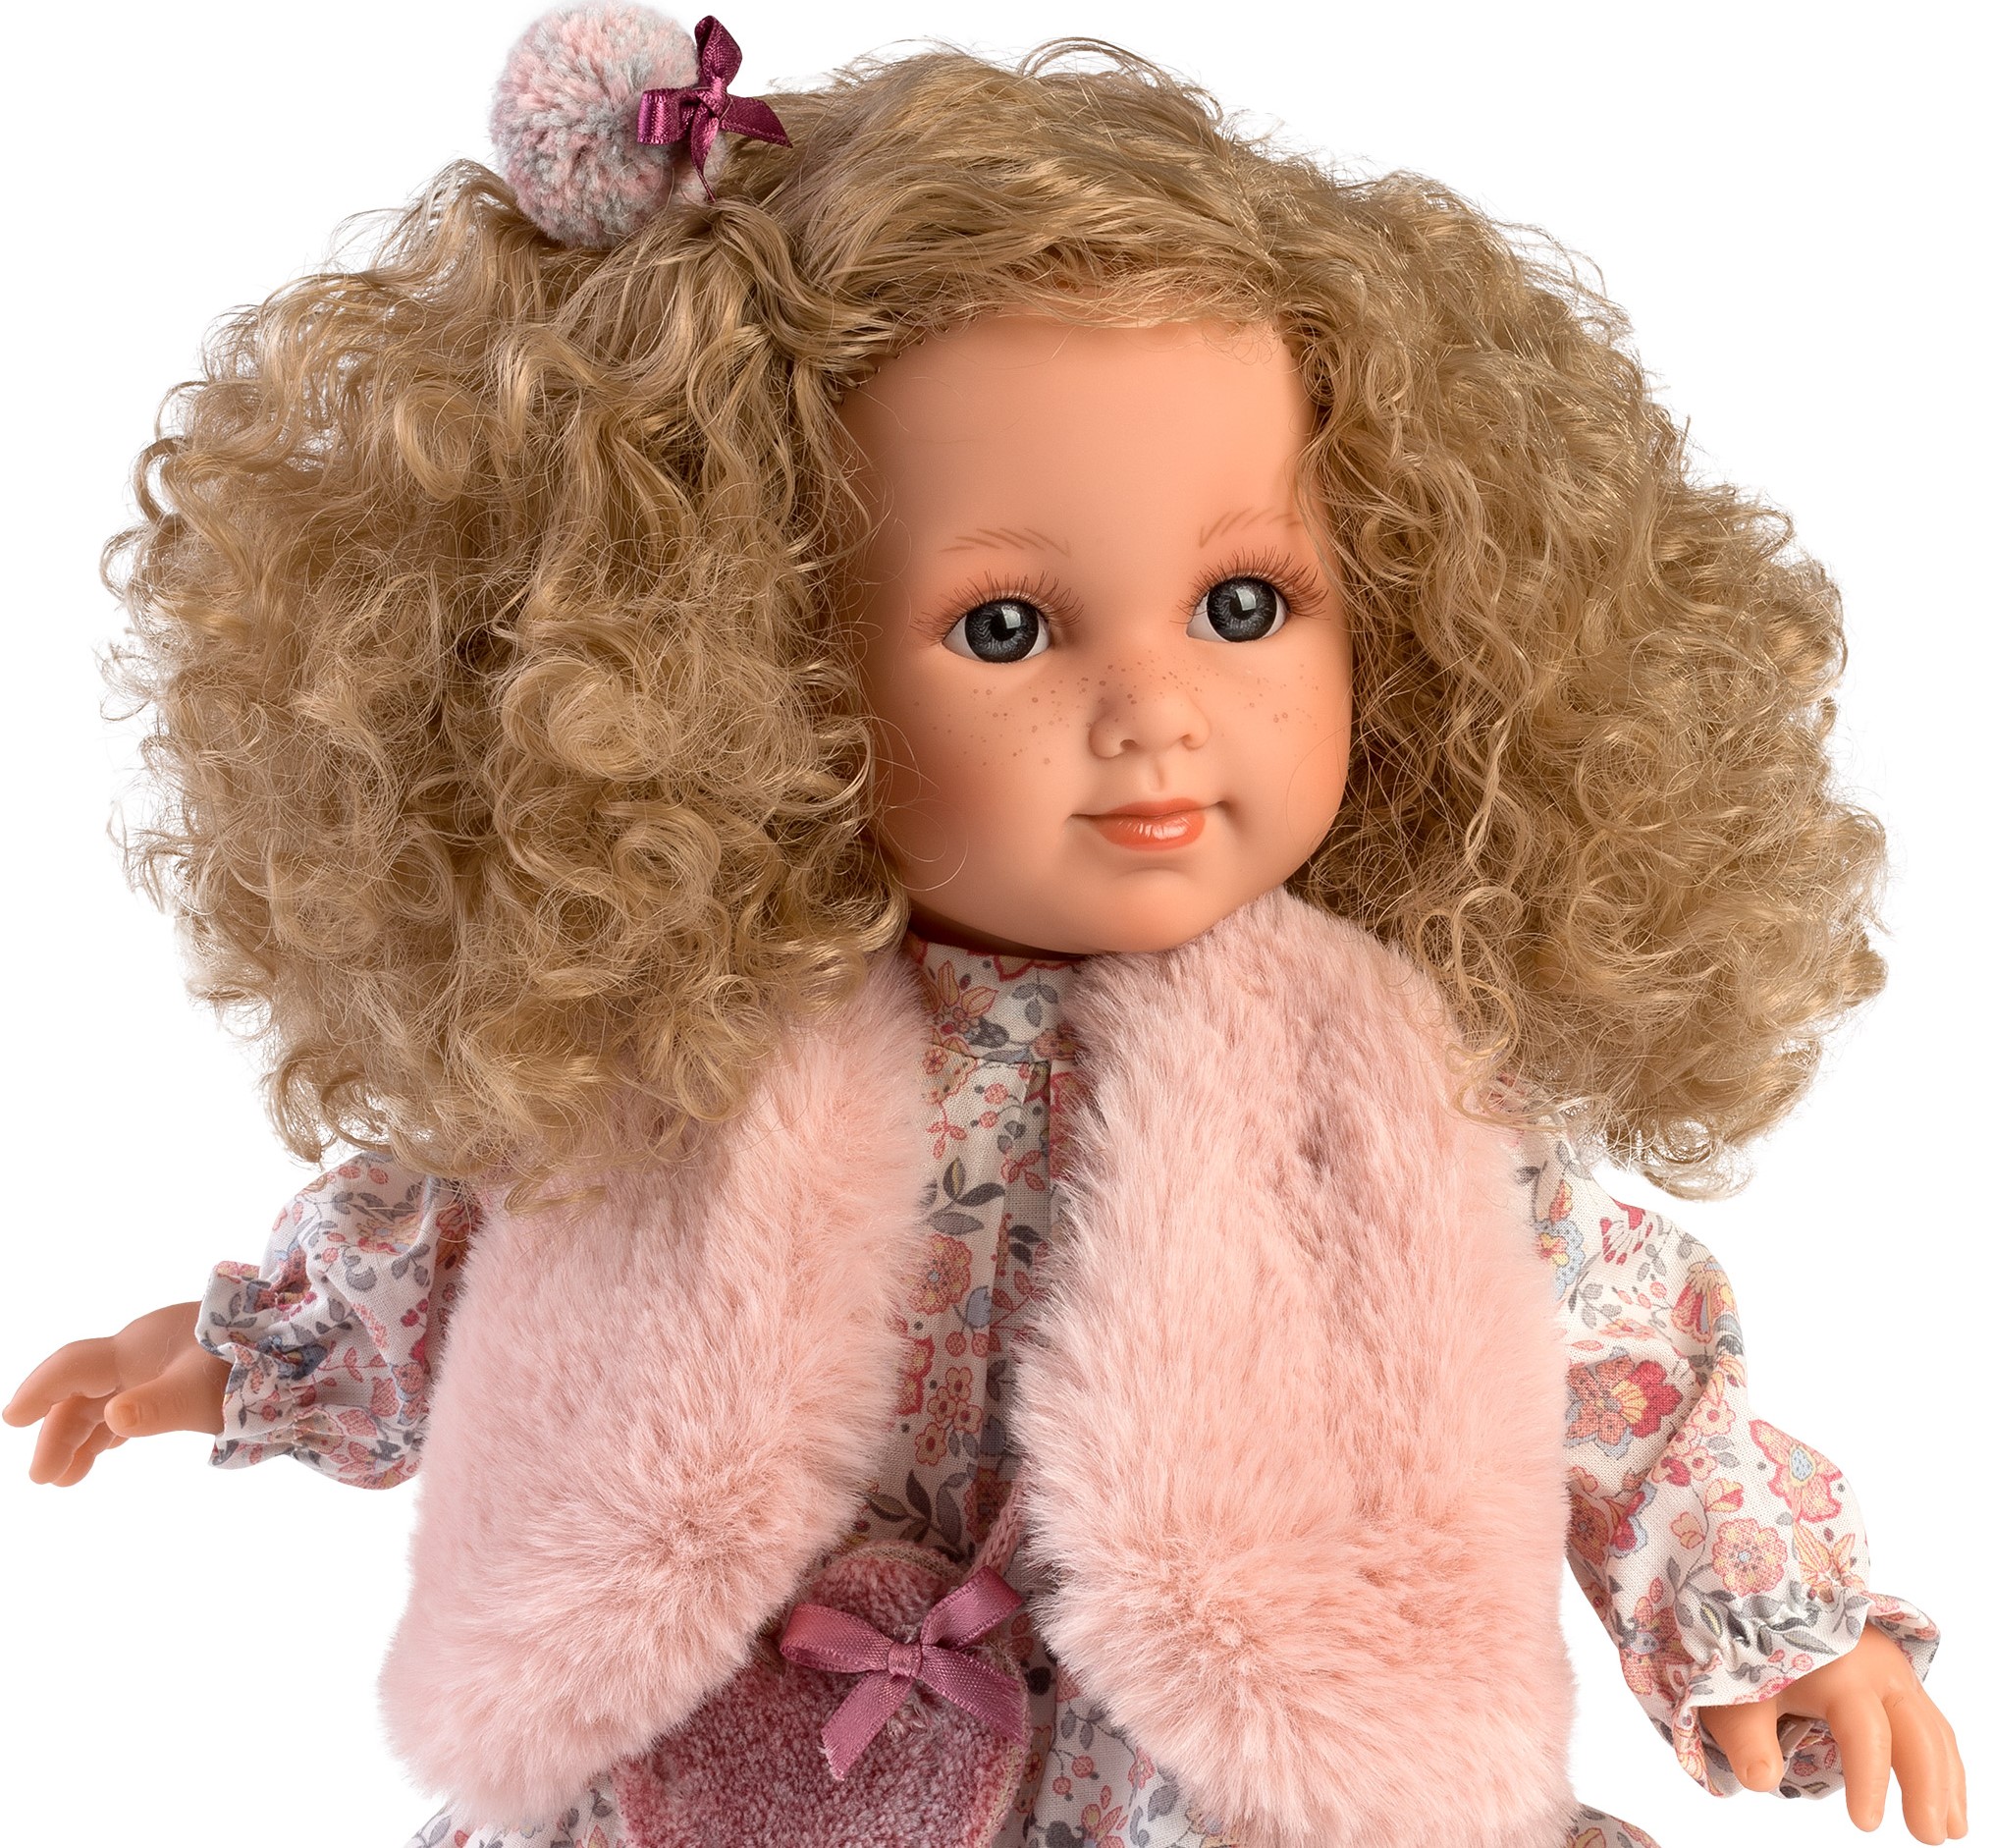 kleinhandel Entertainment beschaving L22a Llorens popje soft body pop met blond krullend haar en kleding 35 cm –  Selintoys